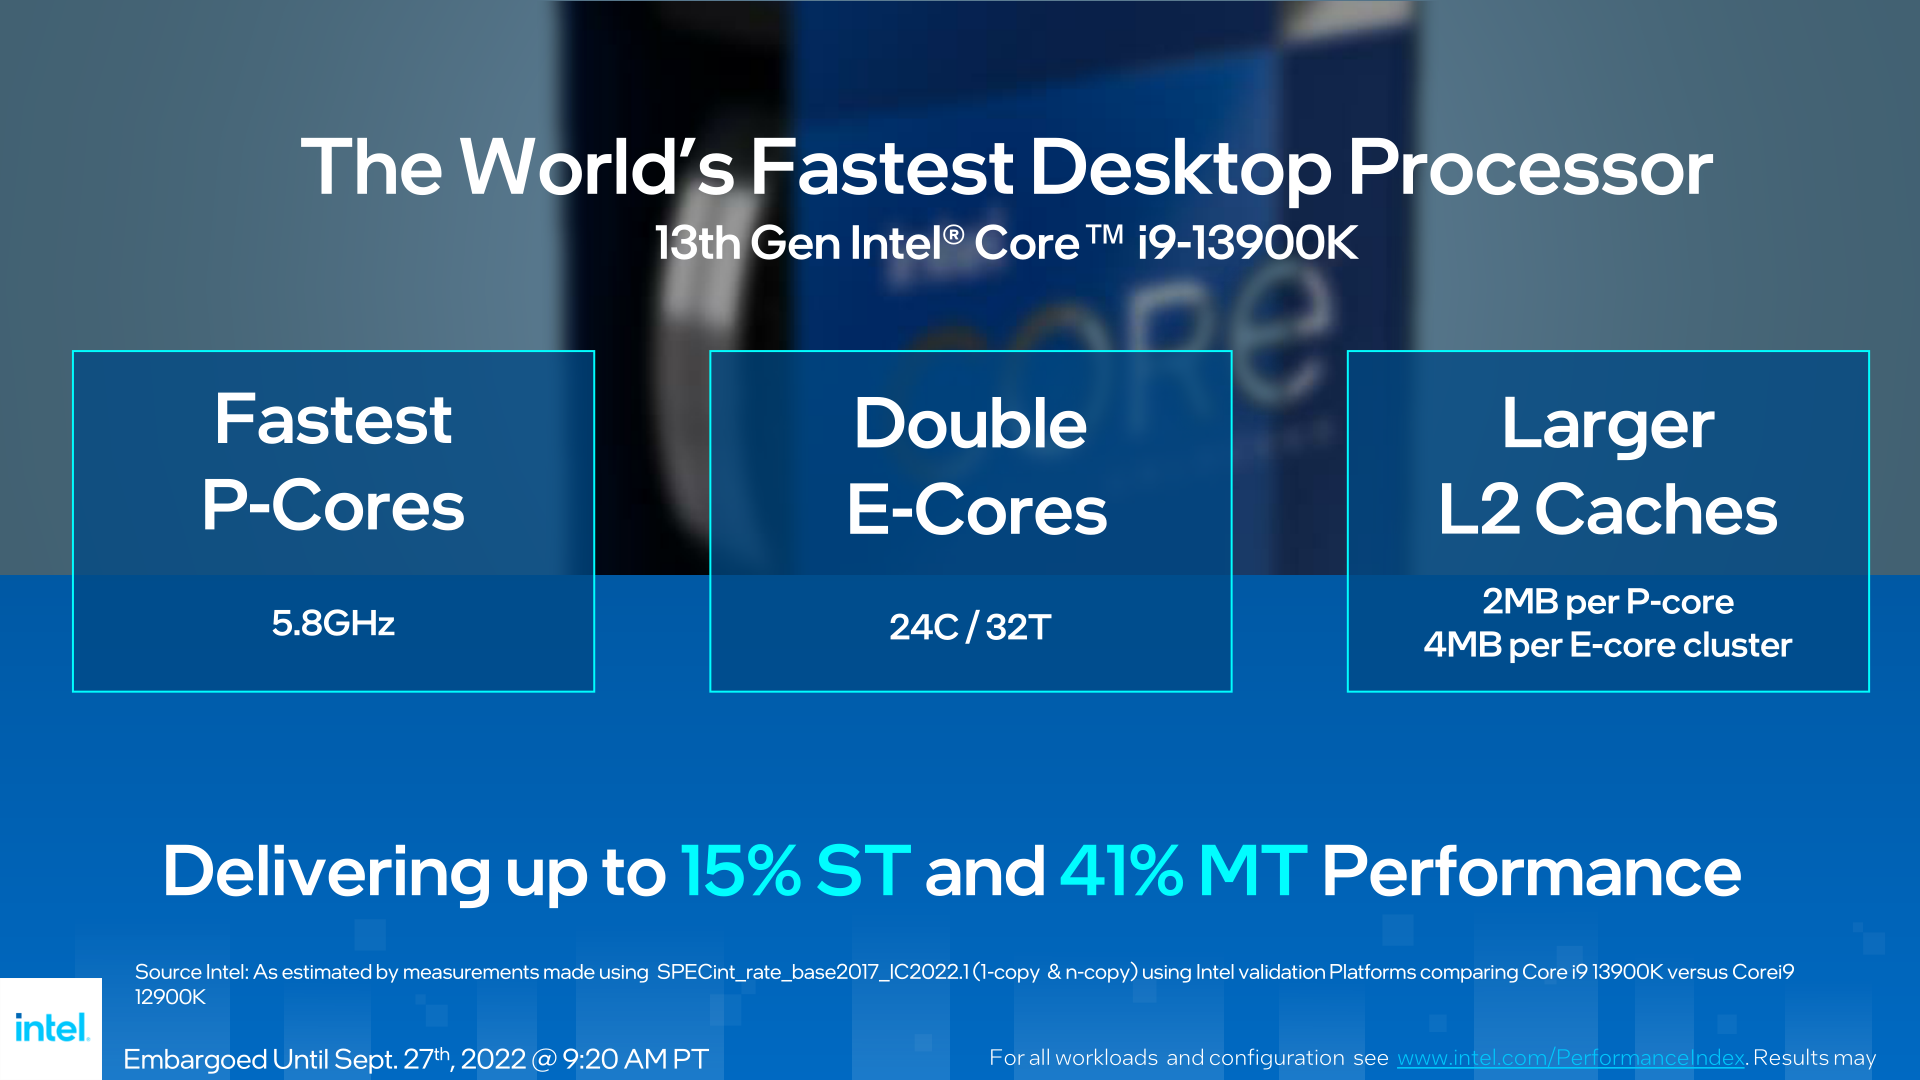 Intel Core i7-13700K Review